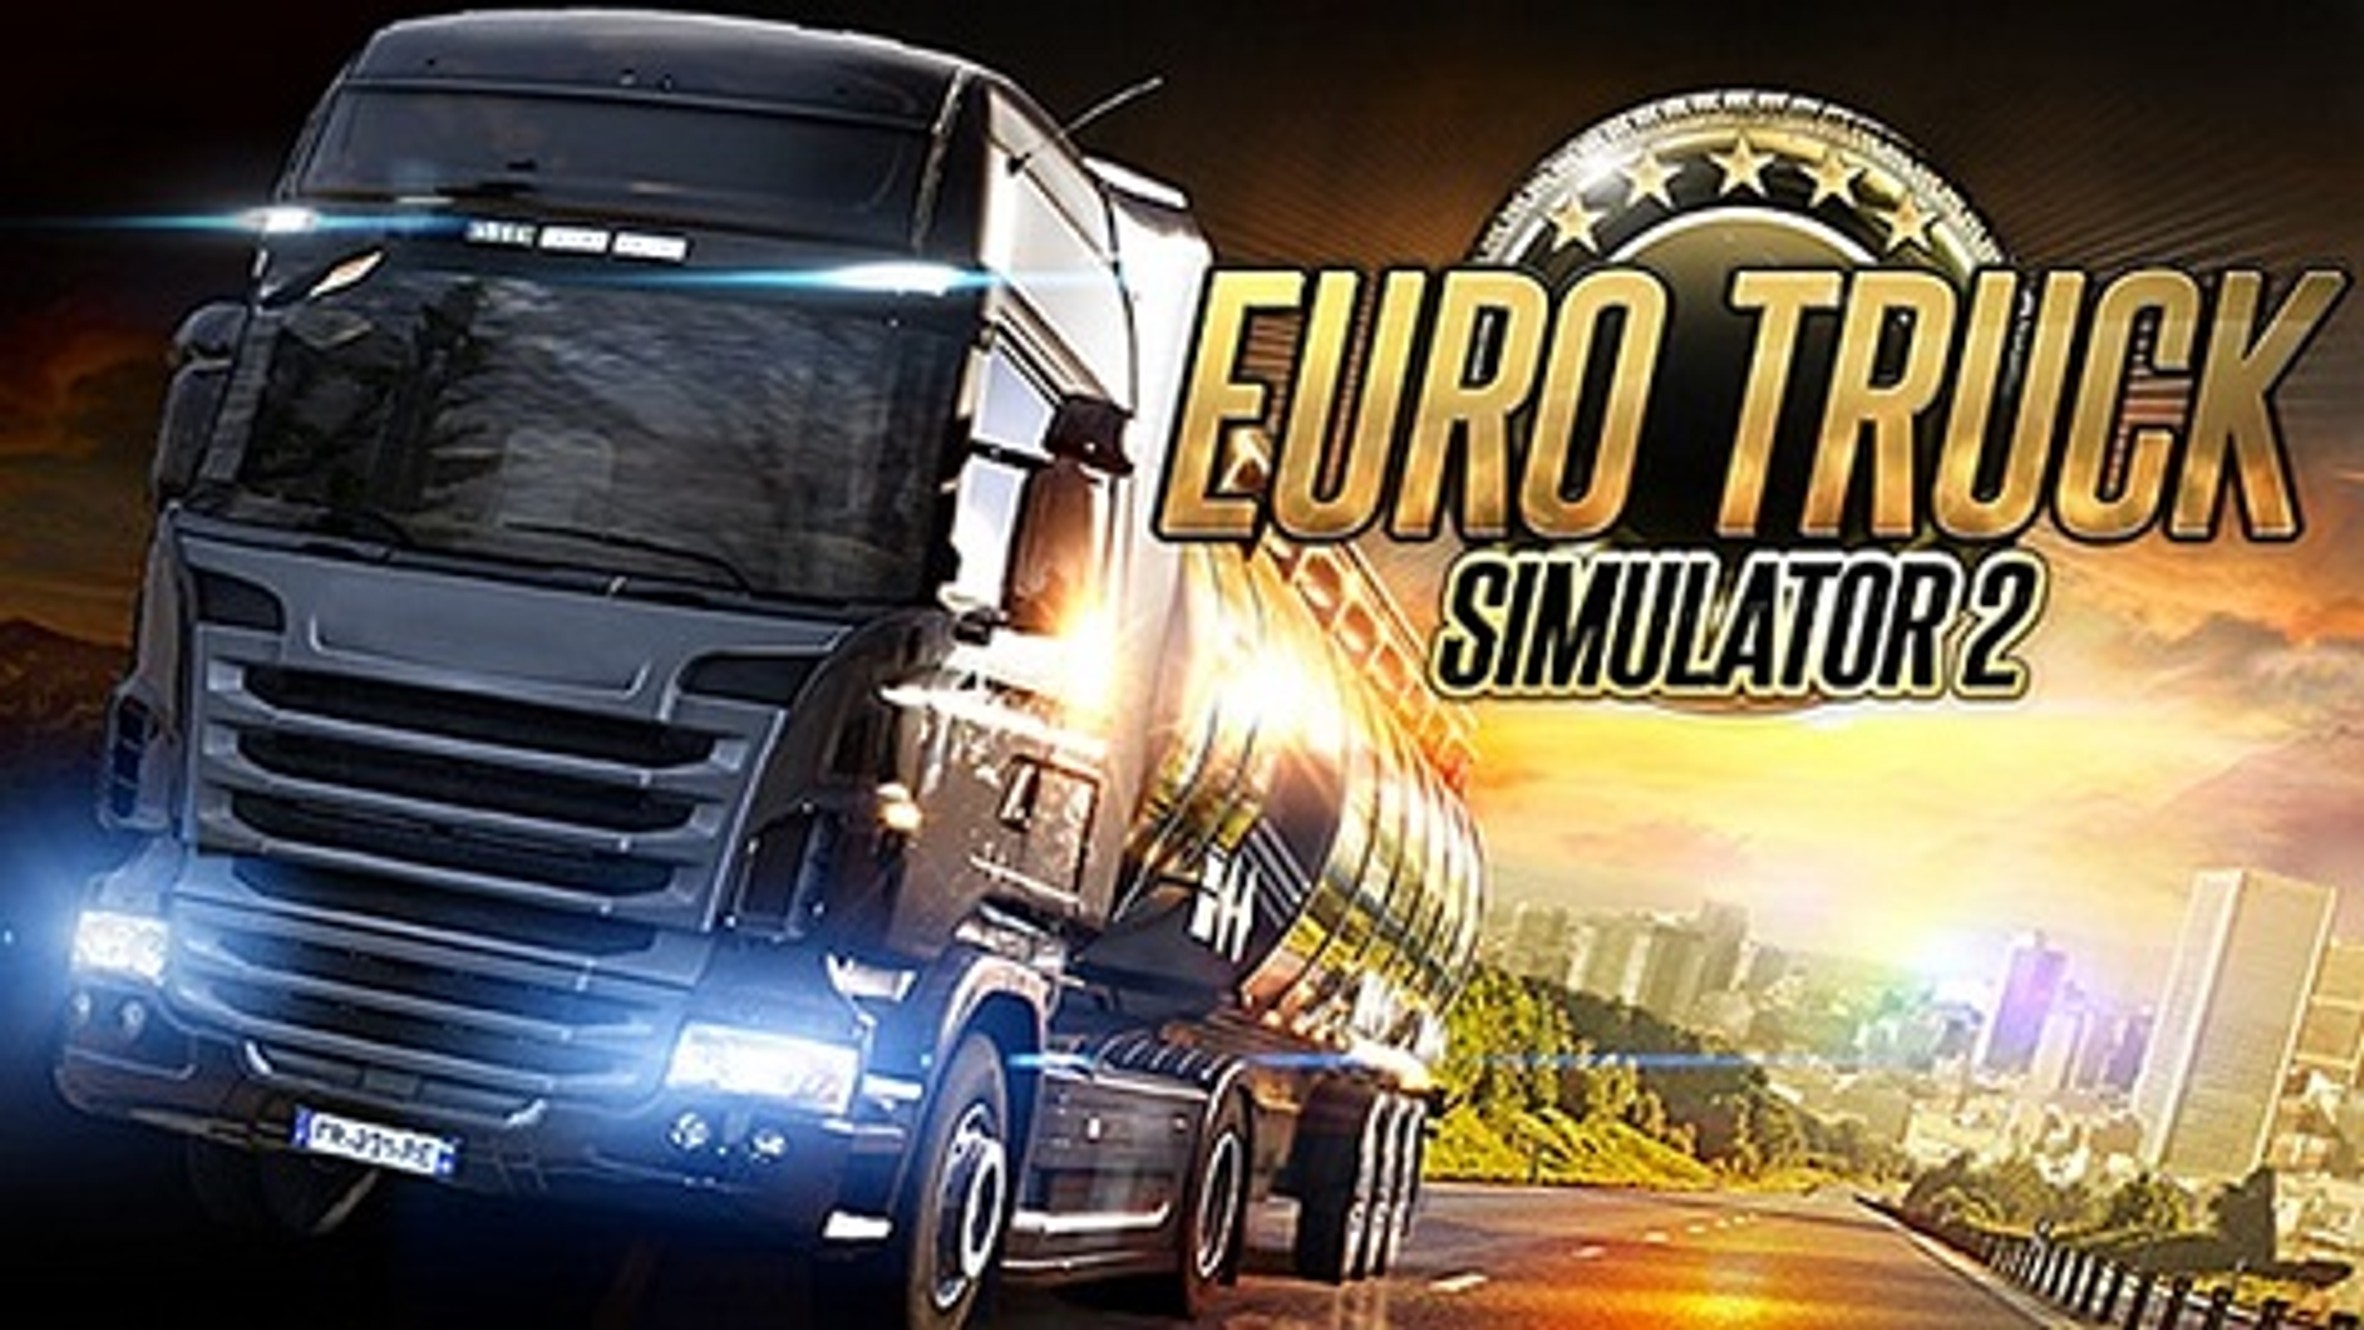 euro truck simulator 2 free download winrar